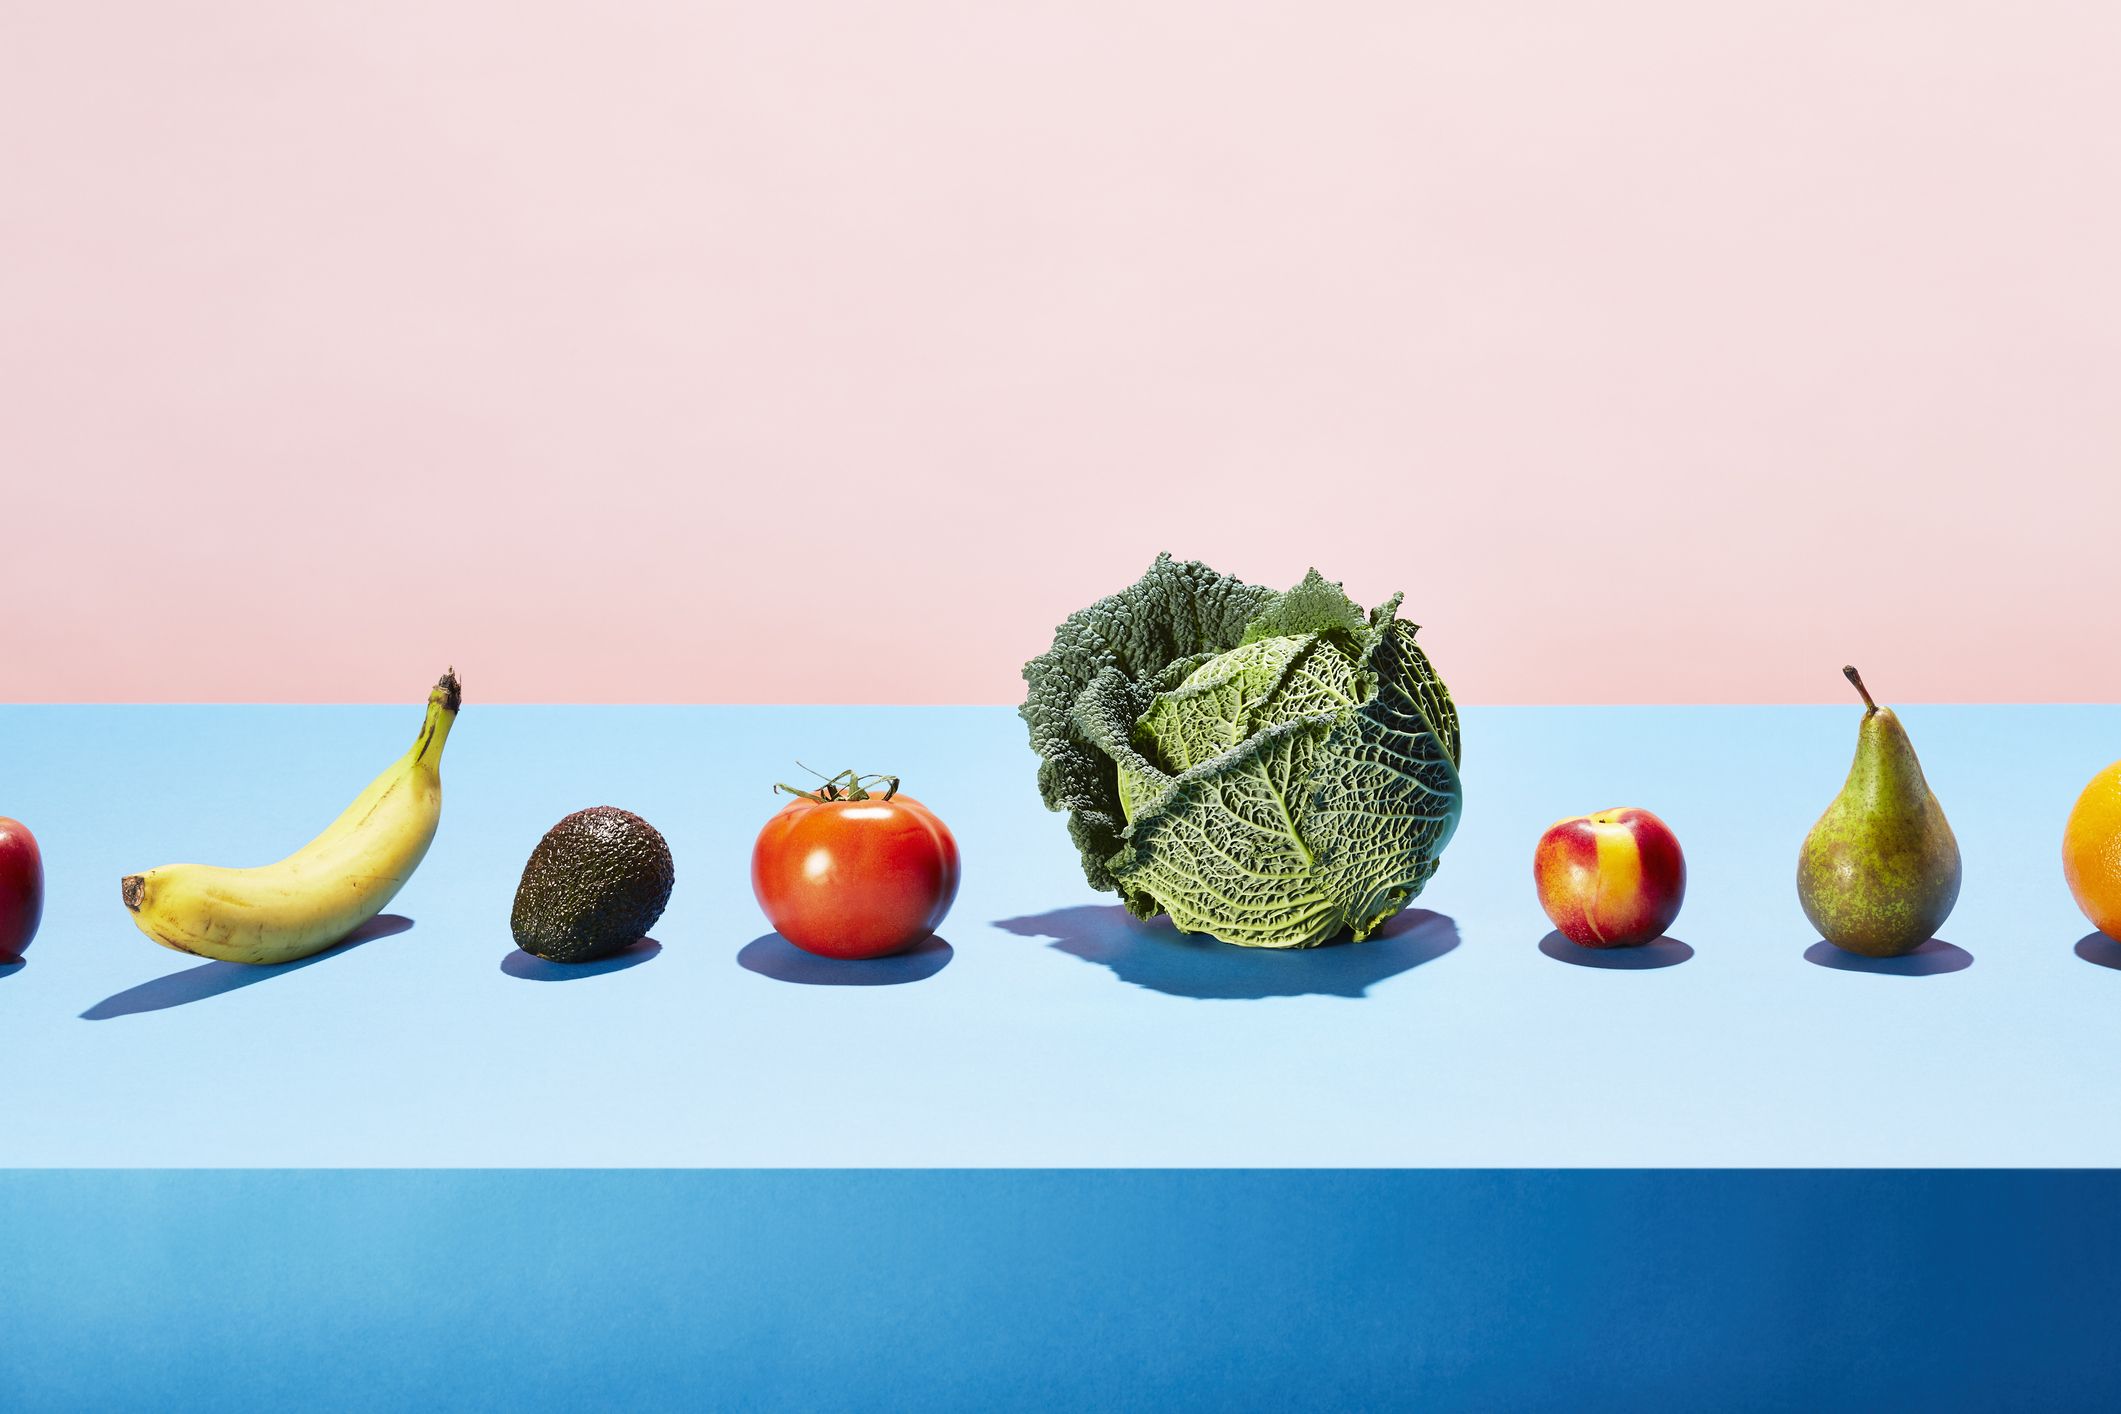 How to Keep Fruits and Veggies Fresh